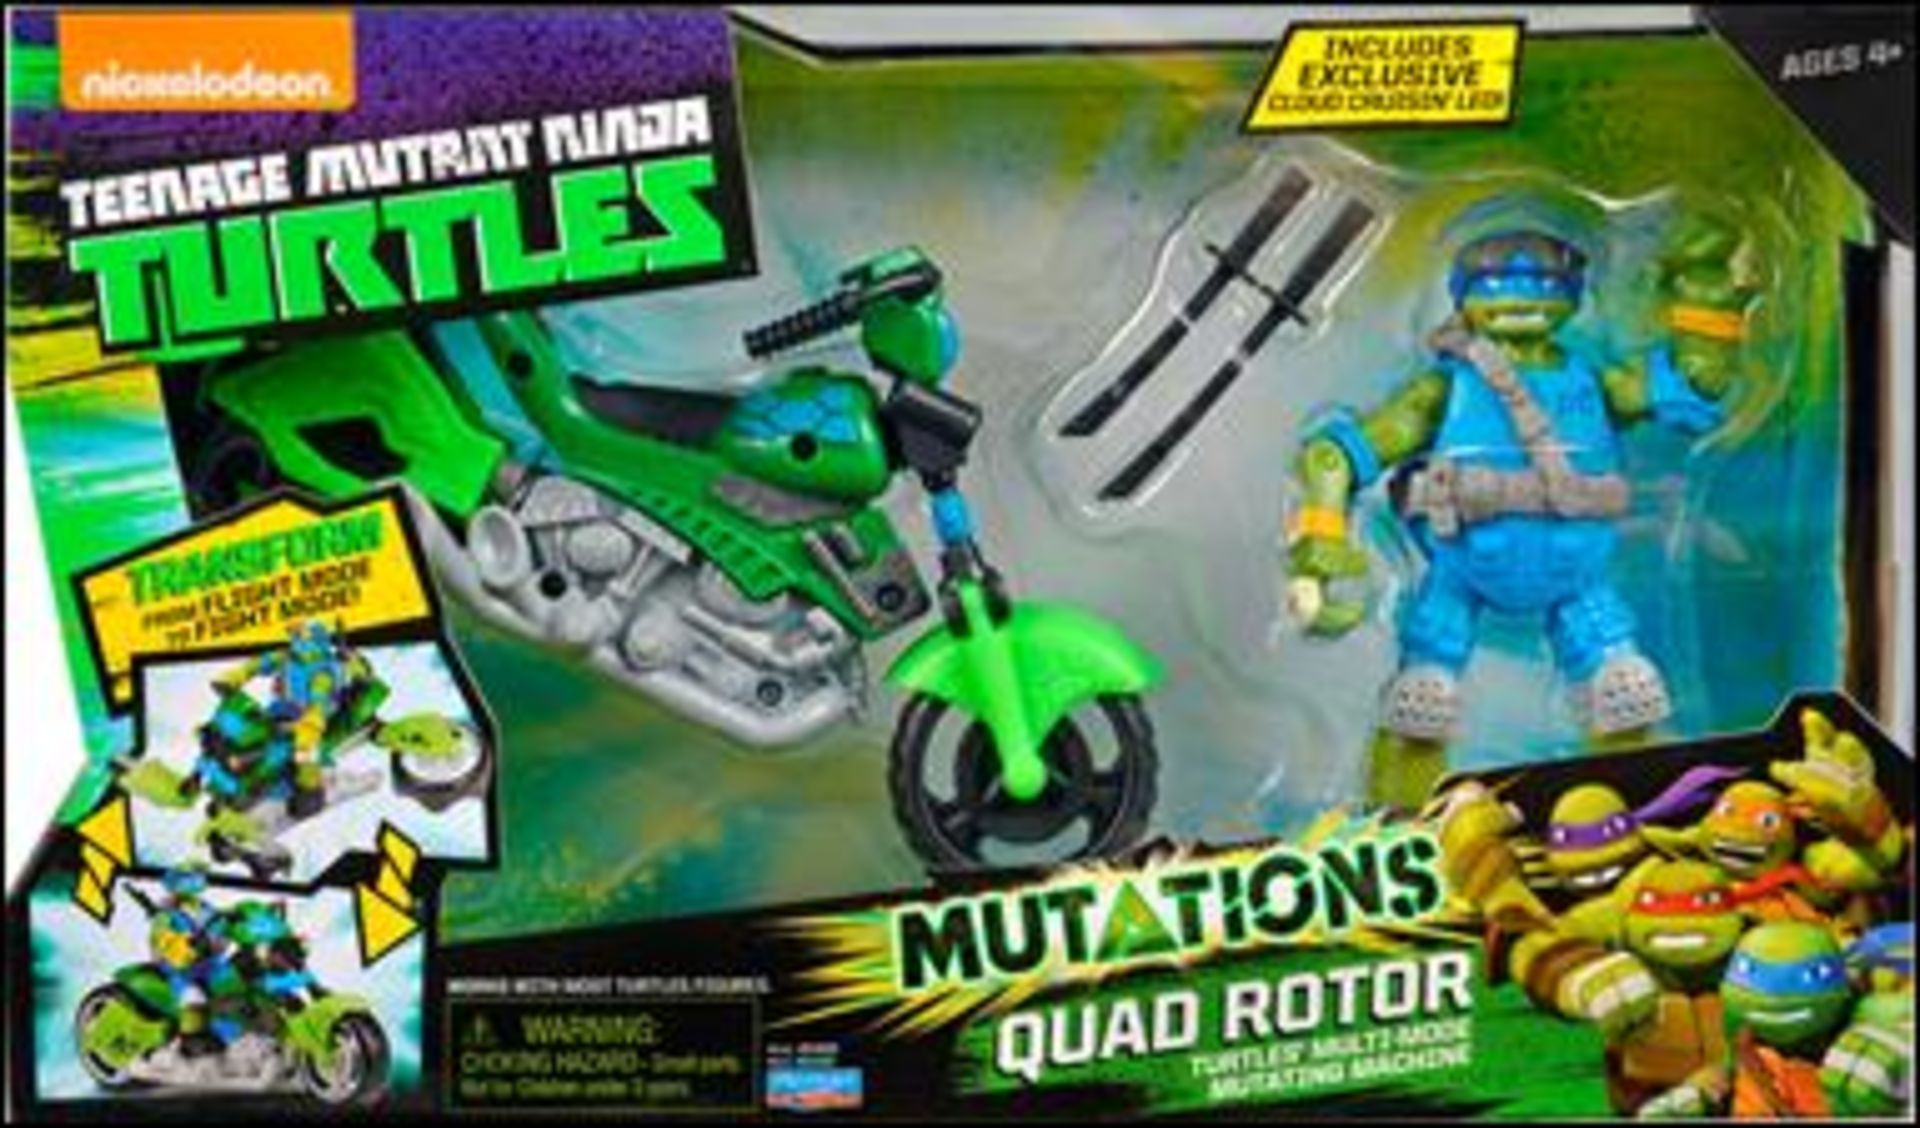 V Brand New Teenage Mutant Ninja Turtles Mutations Quad Rotor - Ebay Prices from £19.95 - £37.41 -